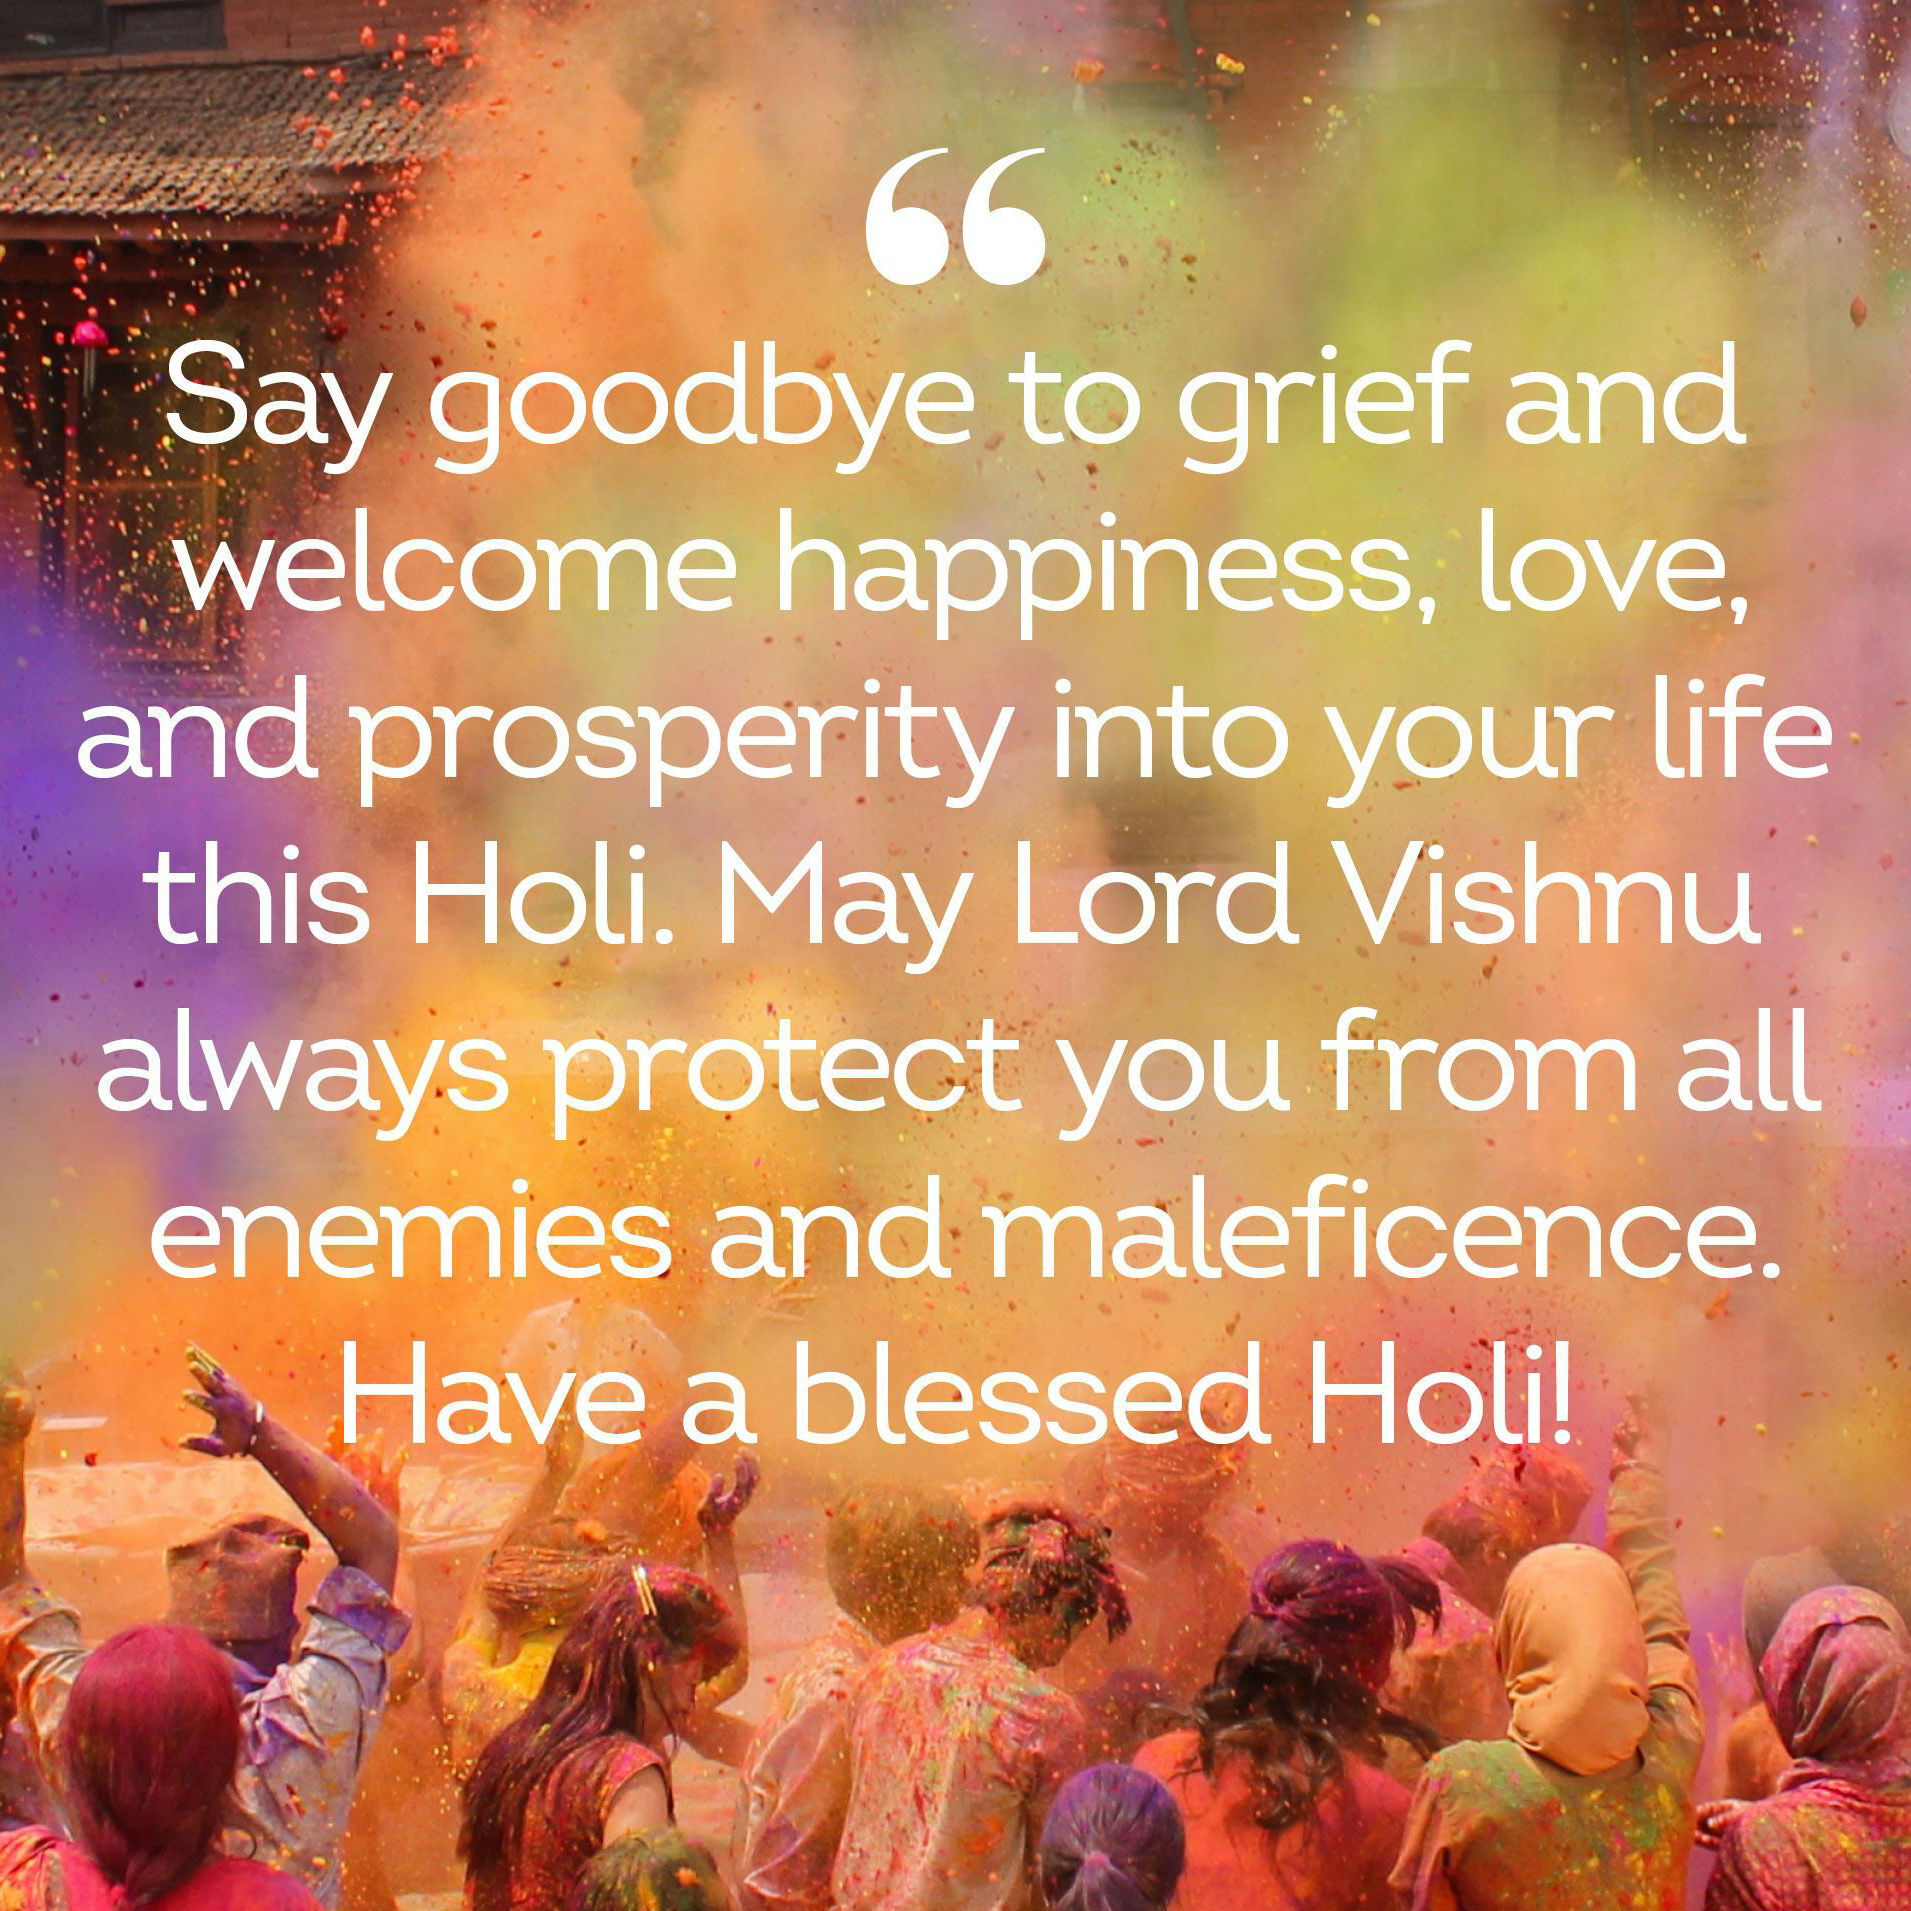 Happy Holi to everyone here!